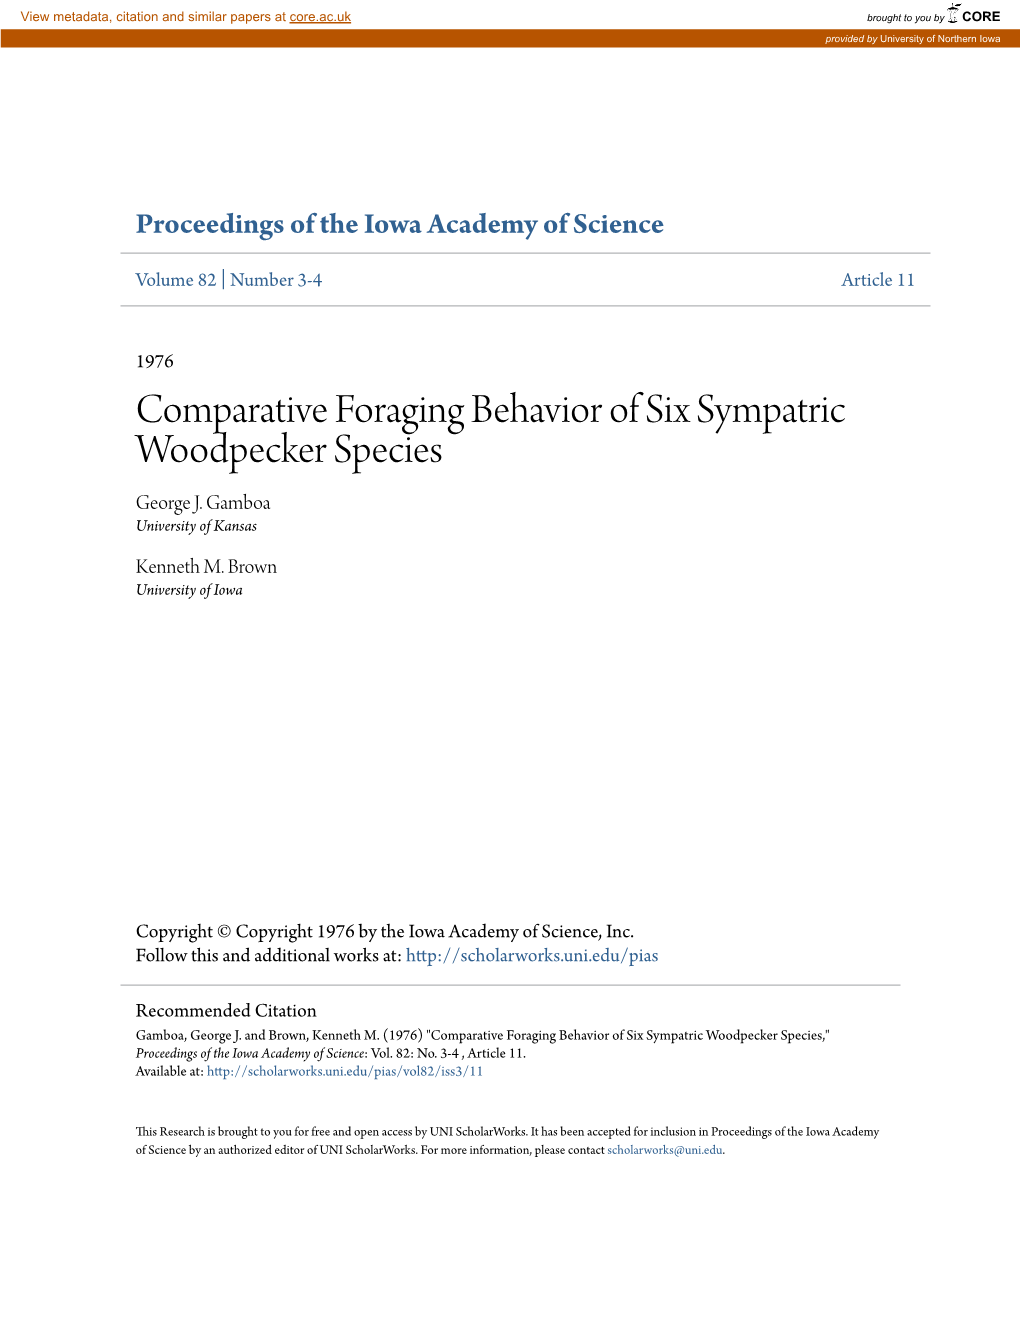 Comparative Foraging Behavior of Six Sympatric Woodpecker Species George J